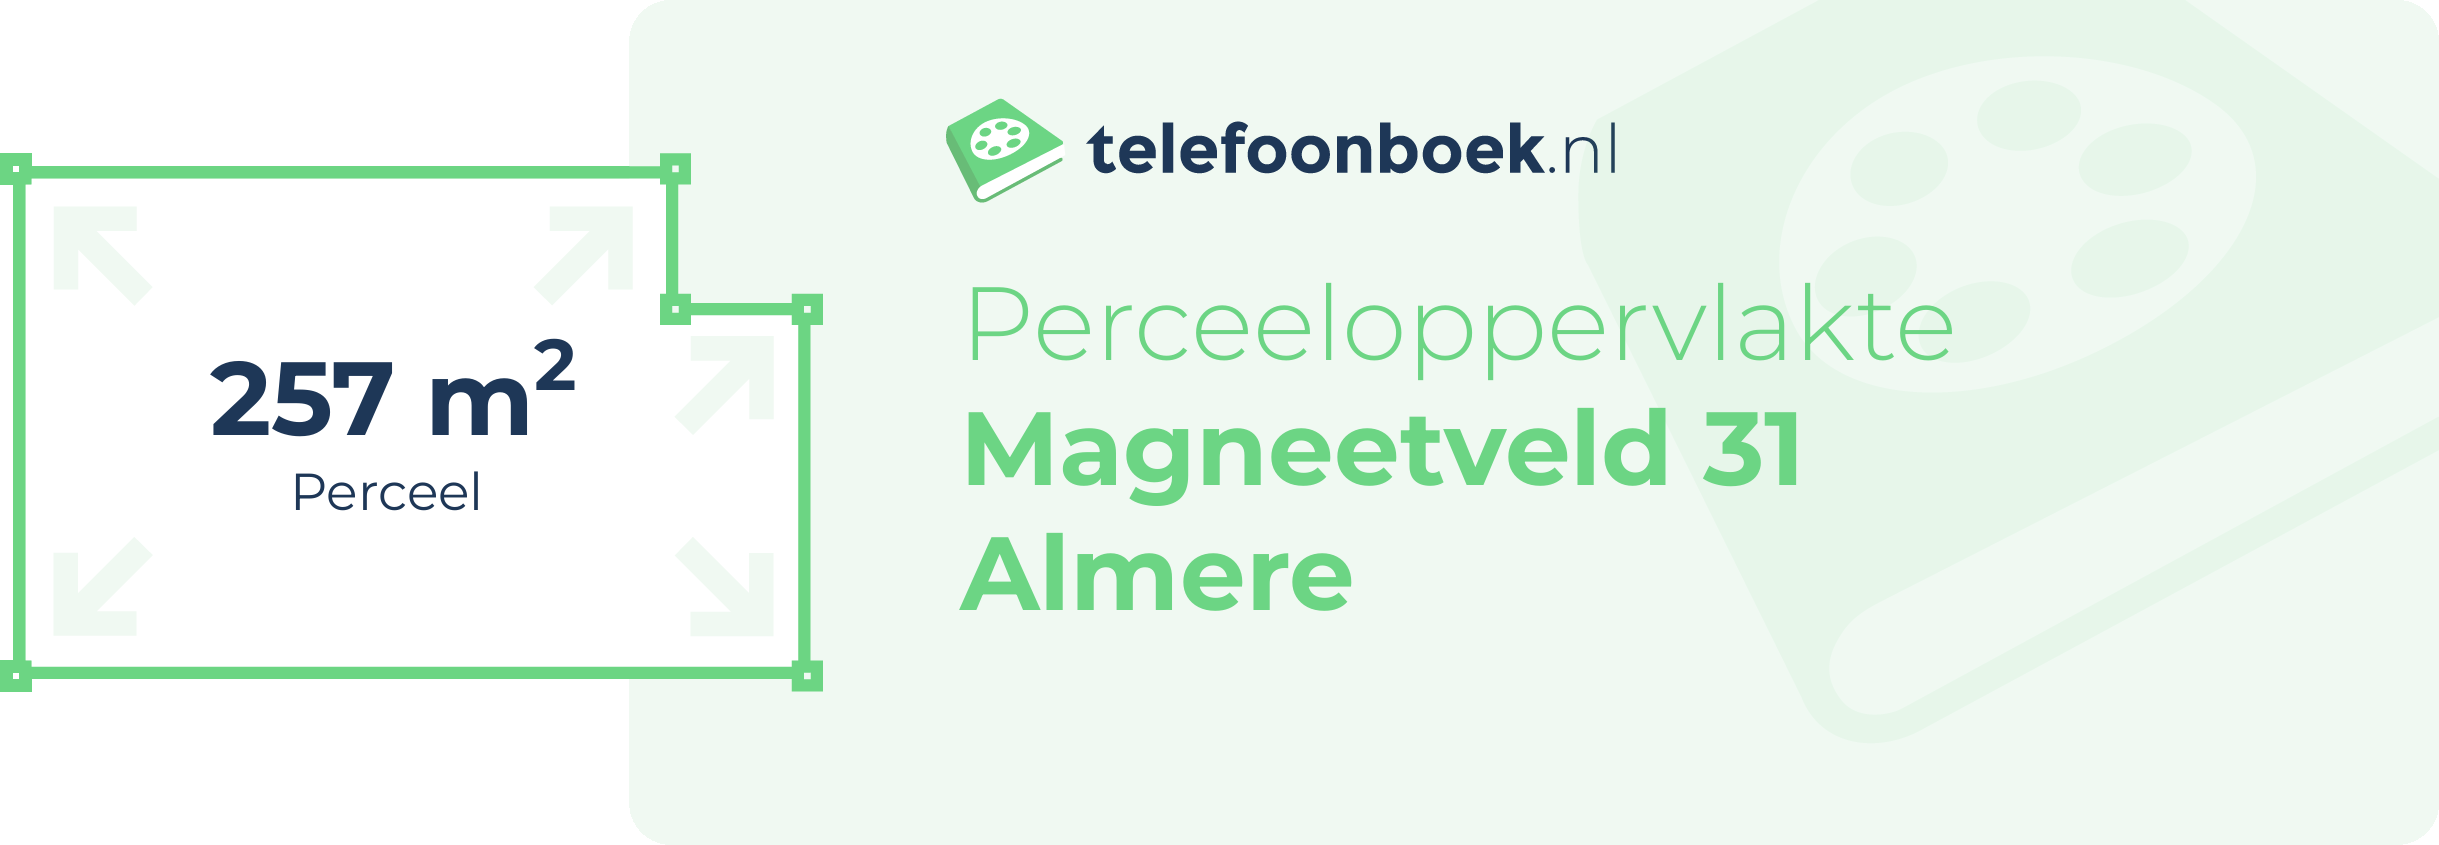 Perceeloppervlakte Magneetveld 31 Almere